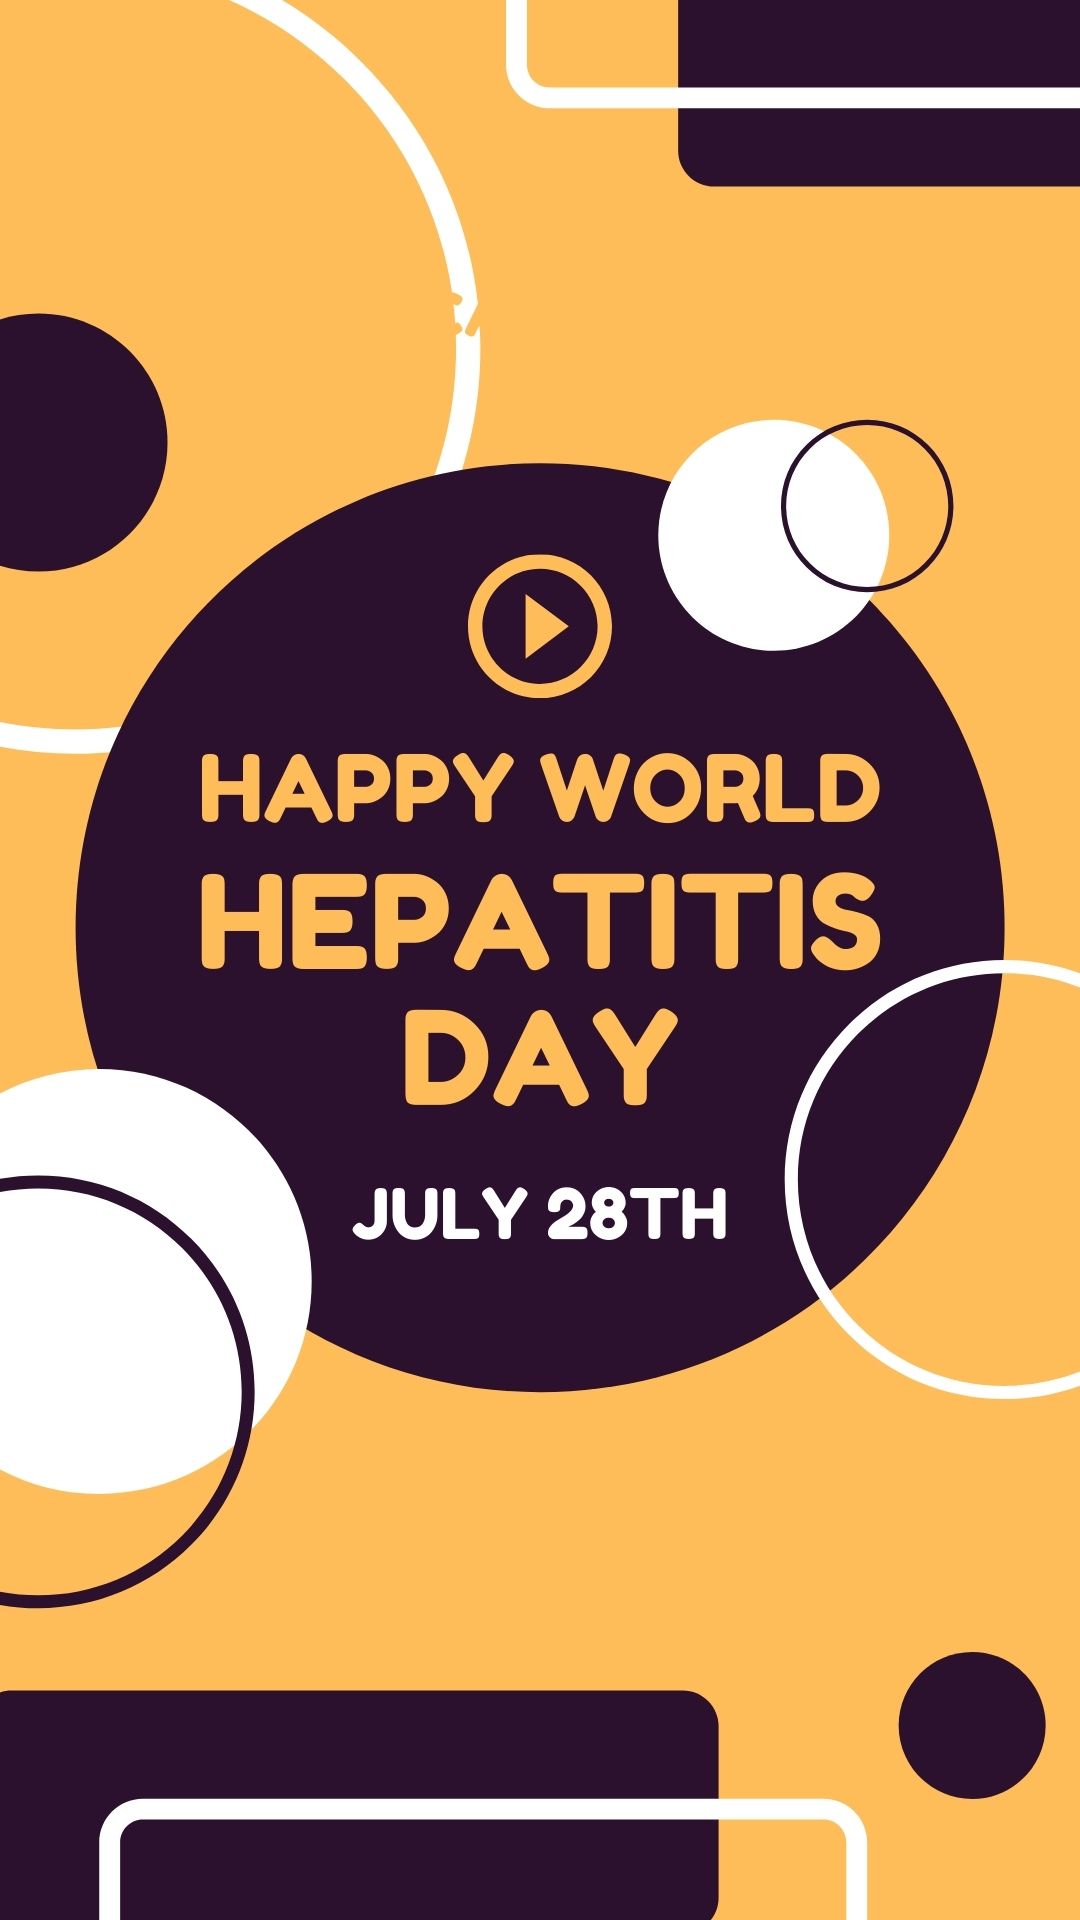 world hepatitis day images for instagram story (4)